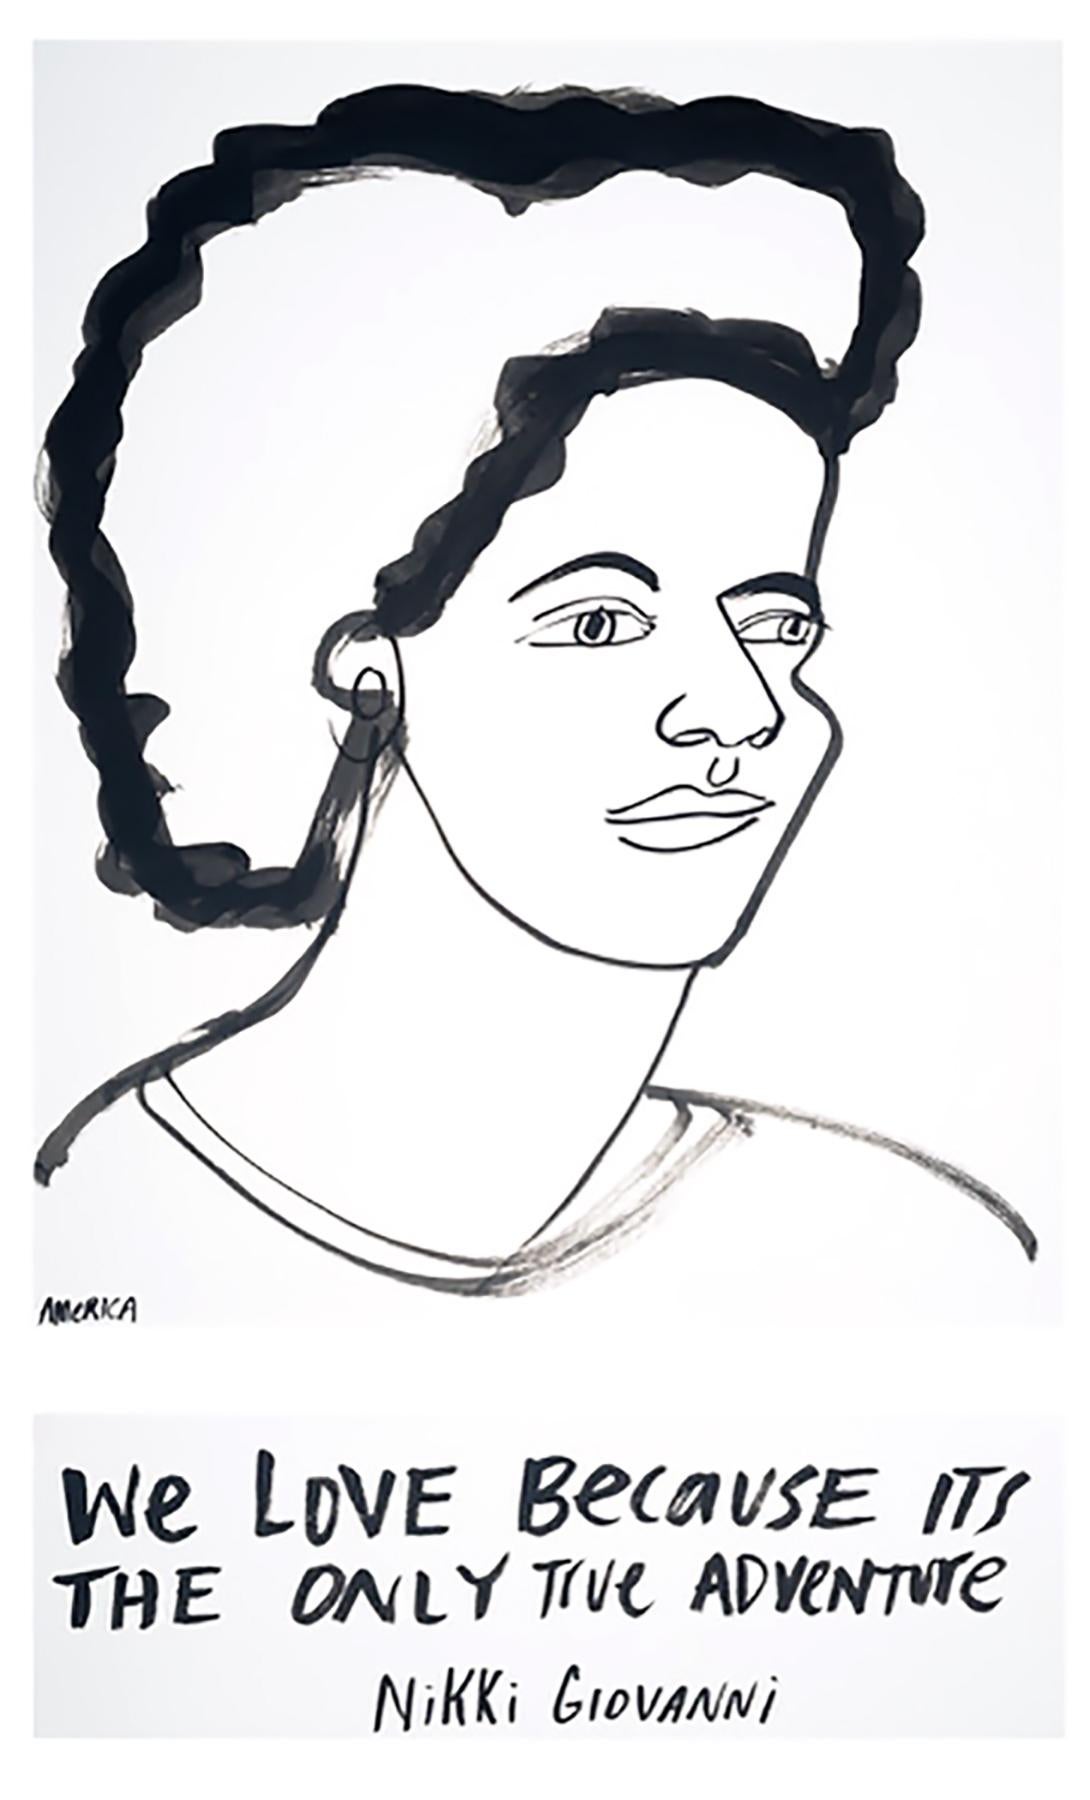 Nikki Giovanni n°2, America Martin, portrait à l'encre, partie de la vente à l'ACLU/NAACP